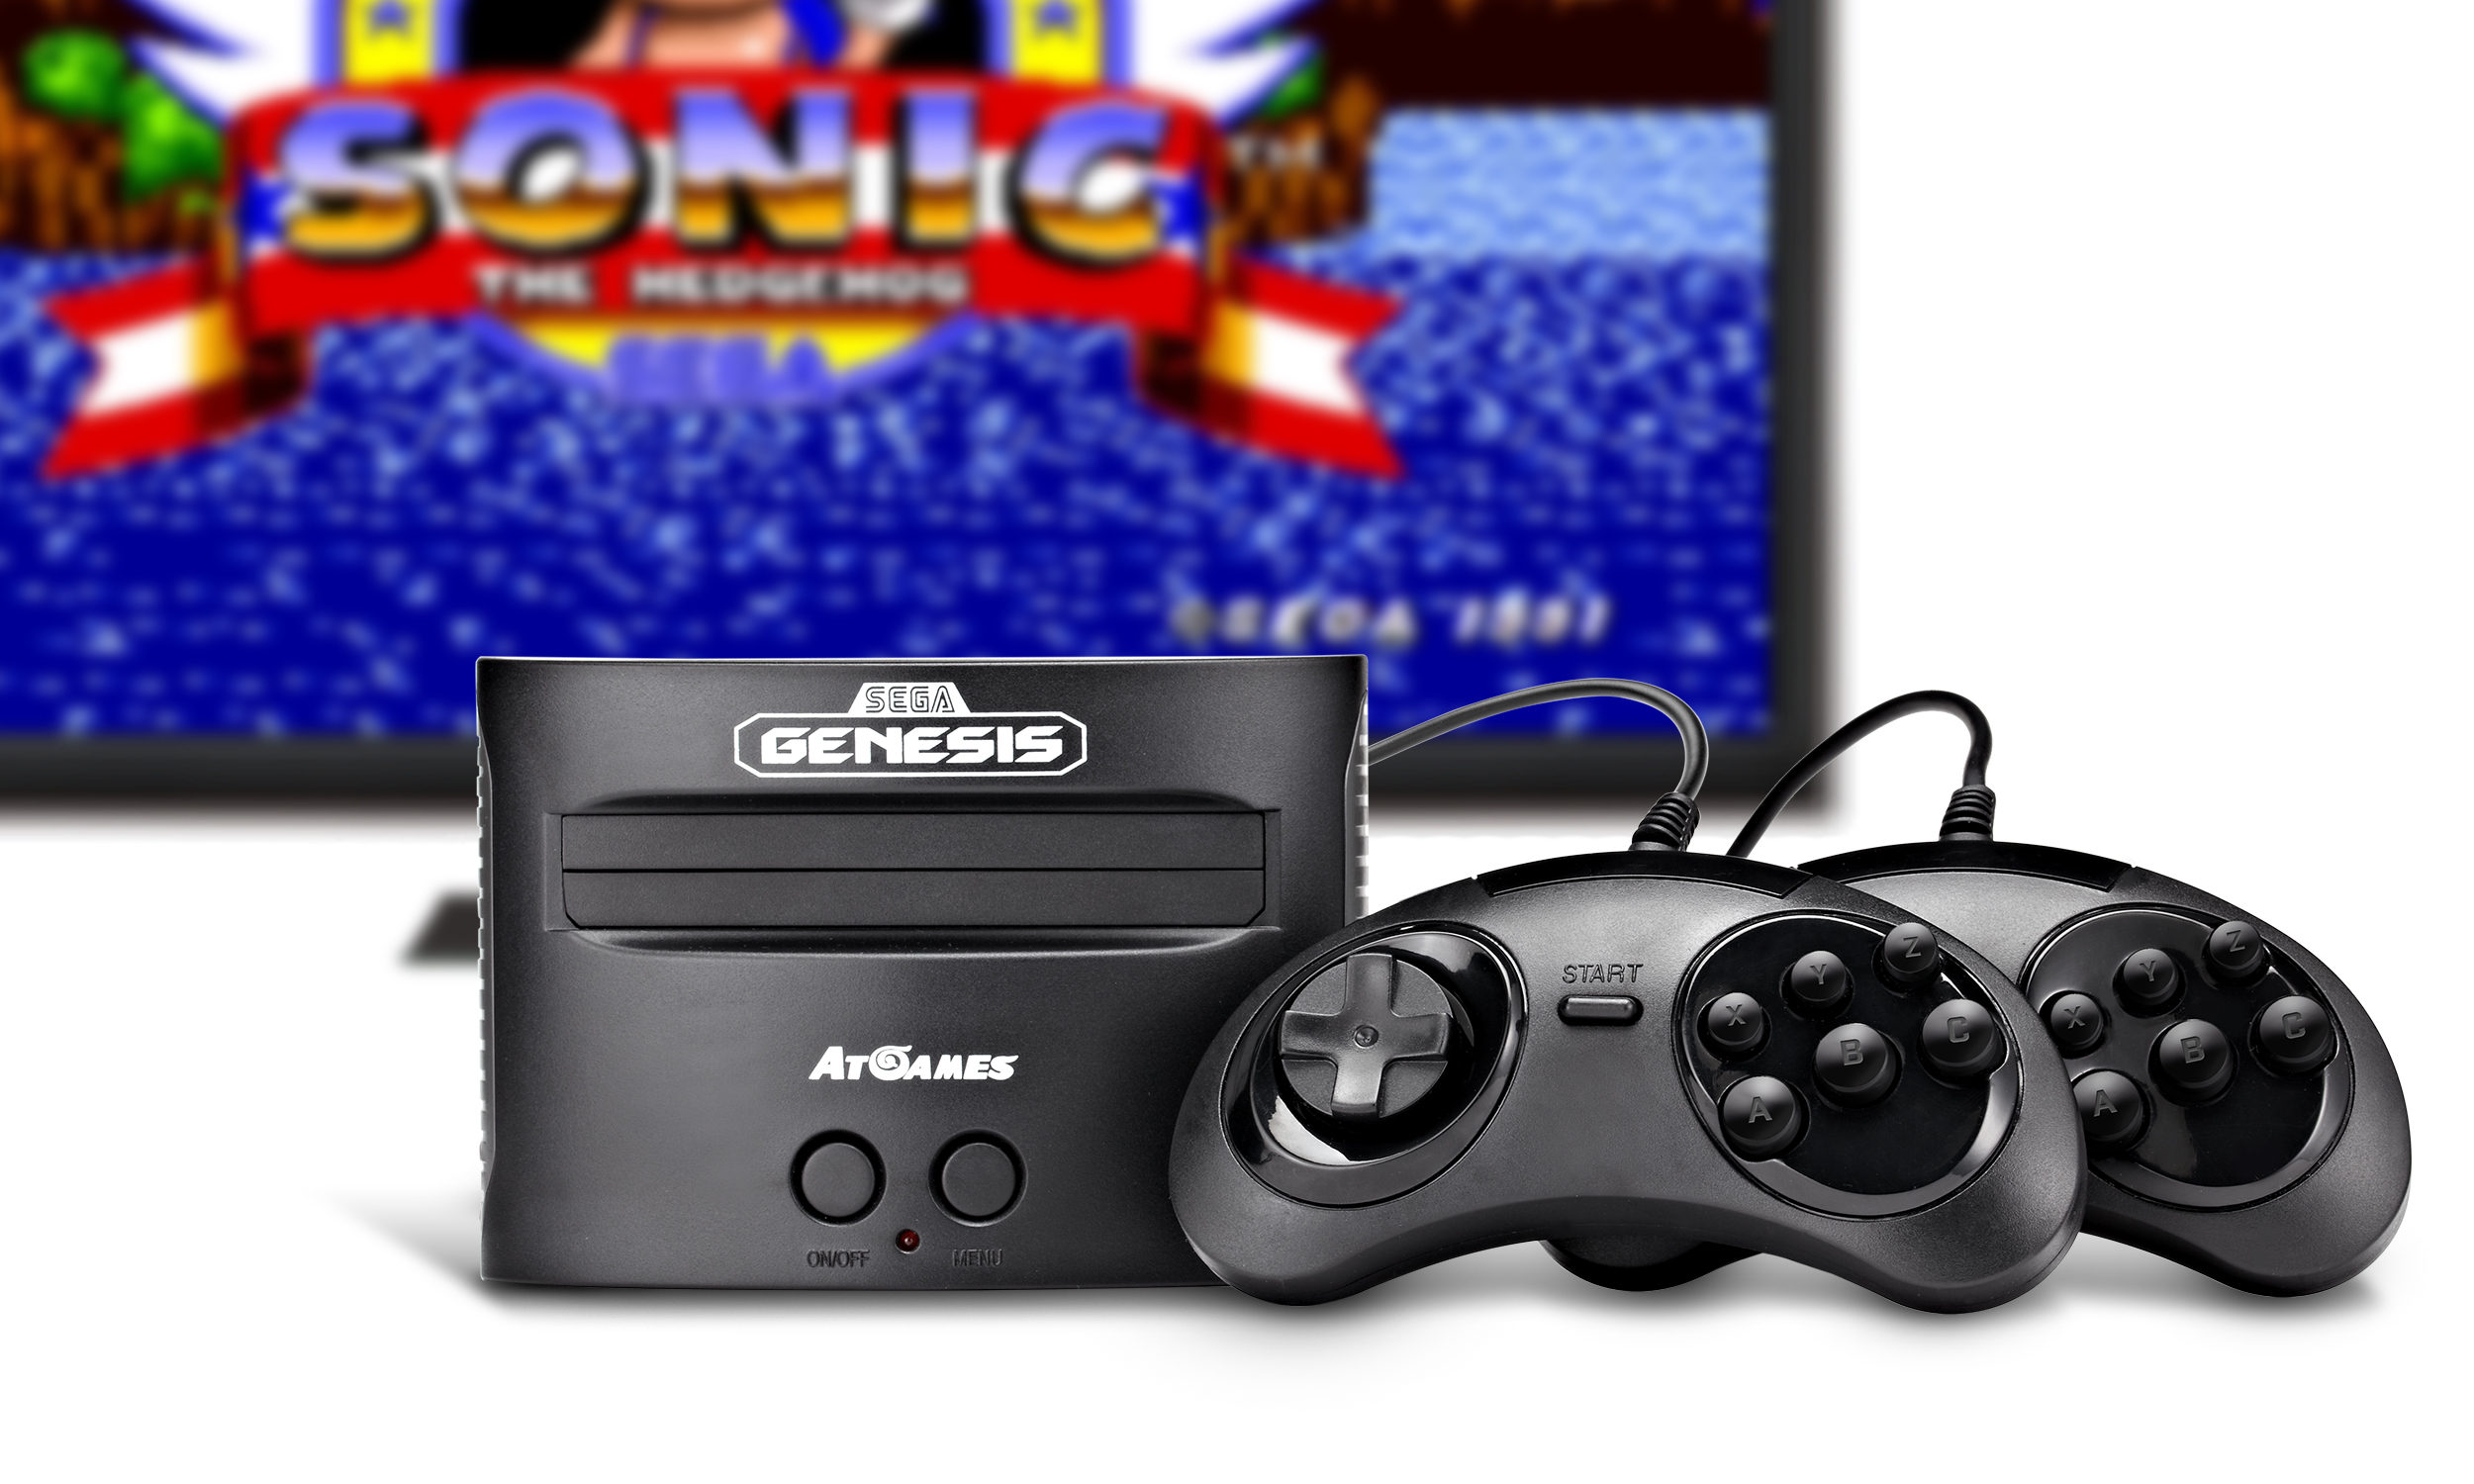 Sega game stick. Приставка Sega Genesis Atomis. Flashback Sega Genesis. Sega Genesis Console. Sega Genesis ATGAMES.